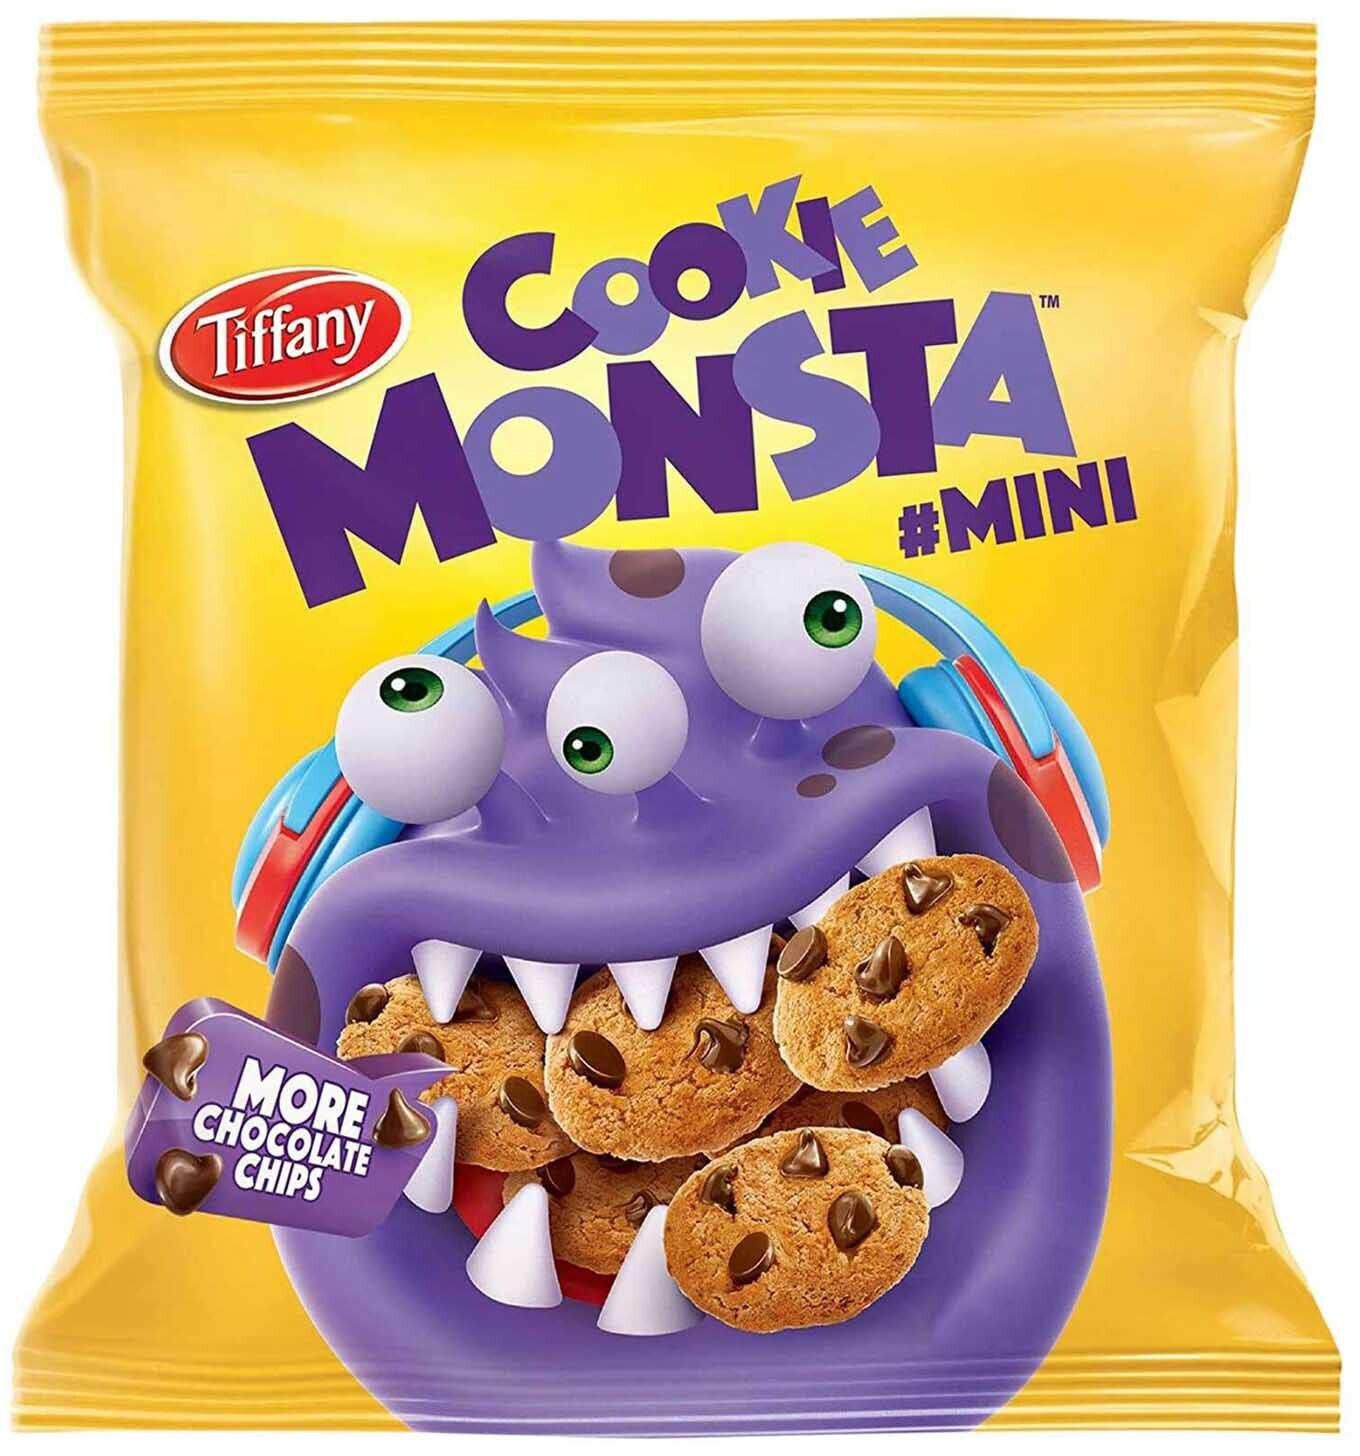 Tiffany monsta chocolate chip cookie 32g